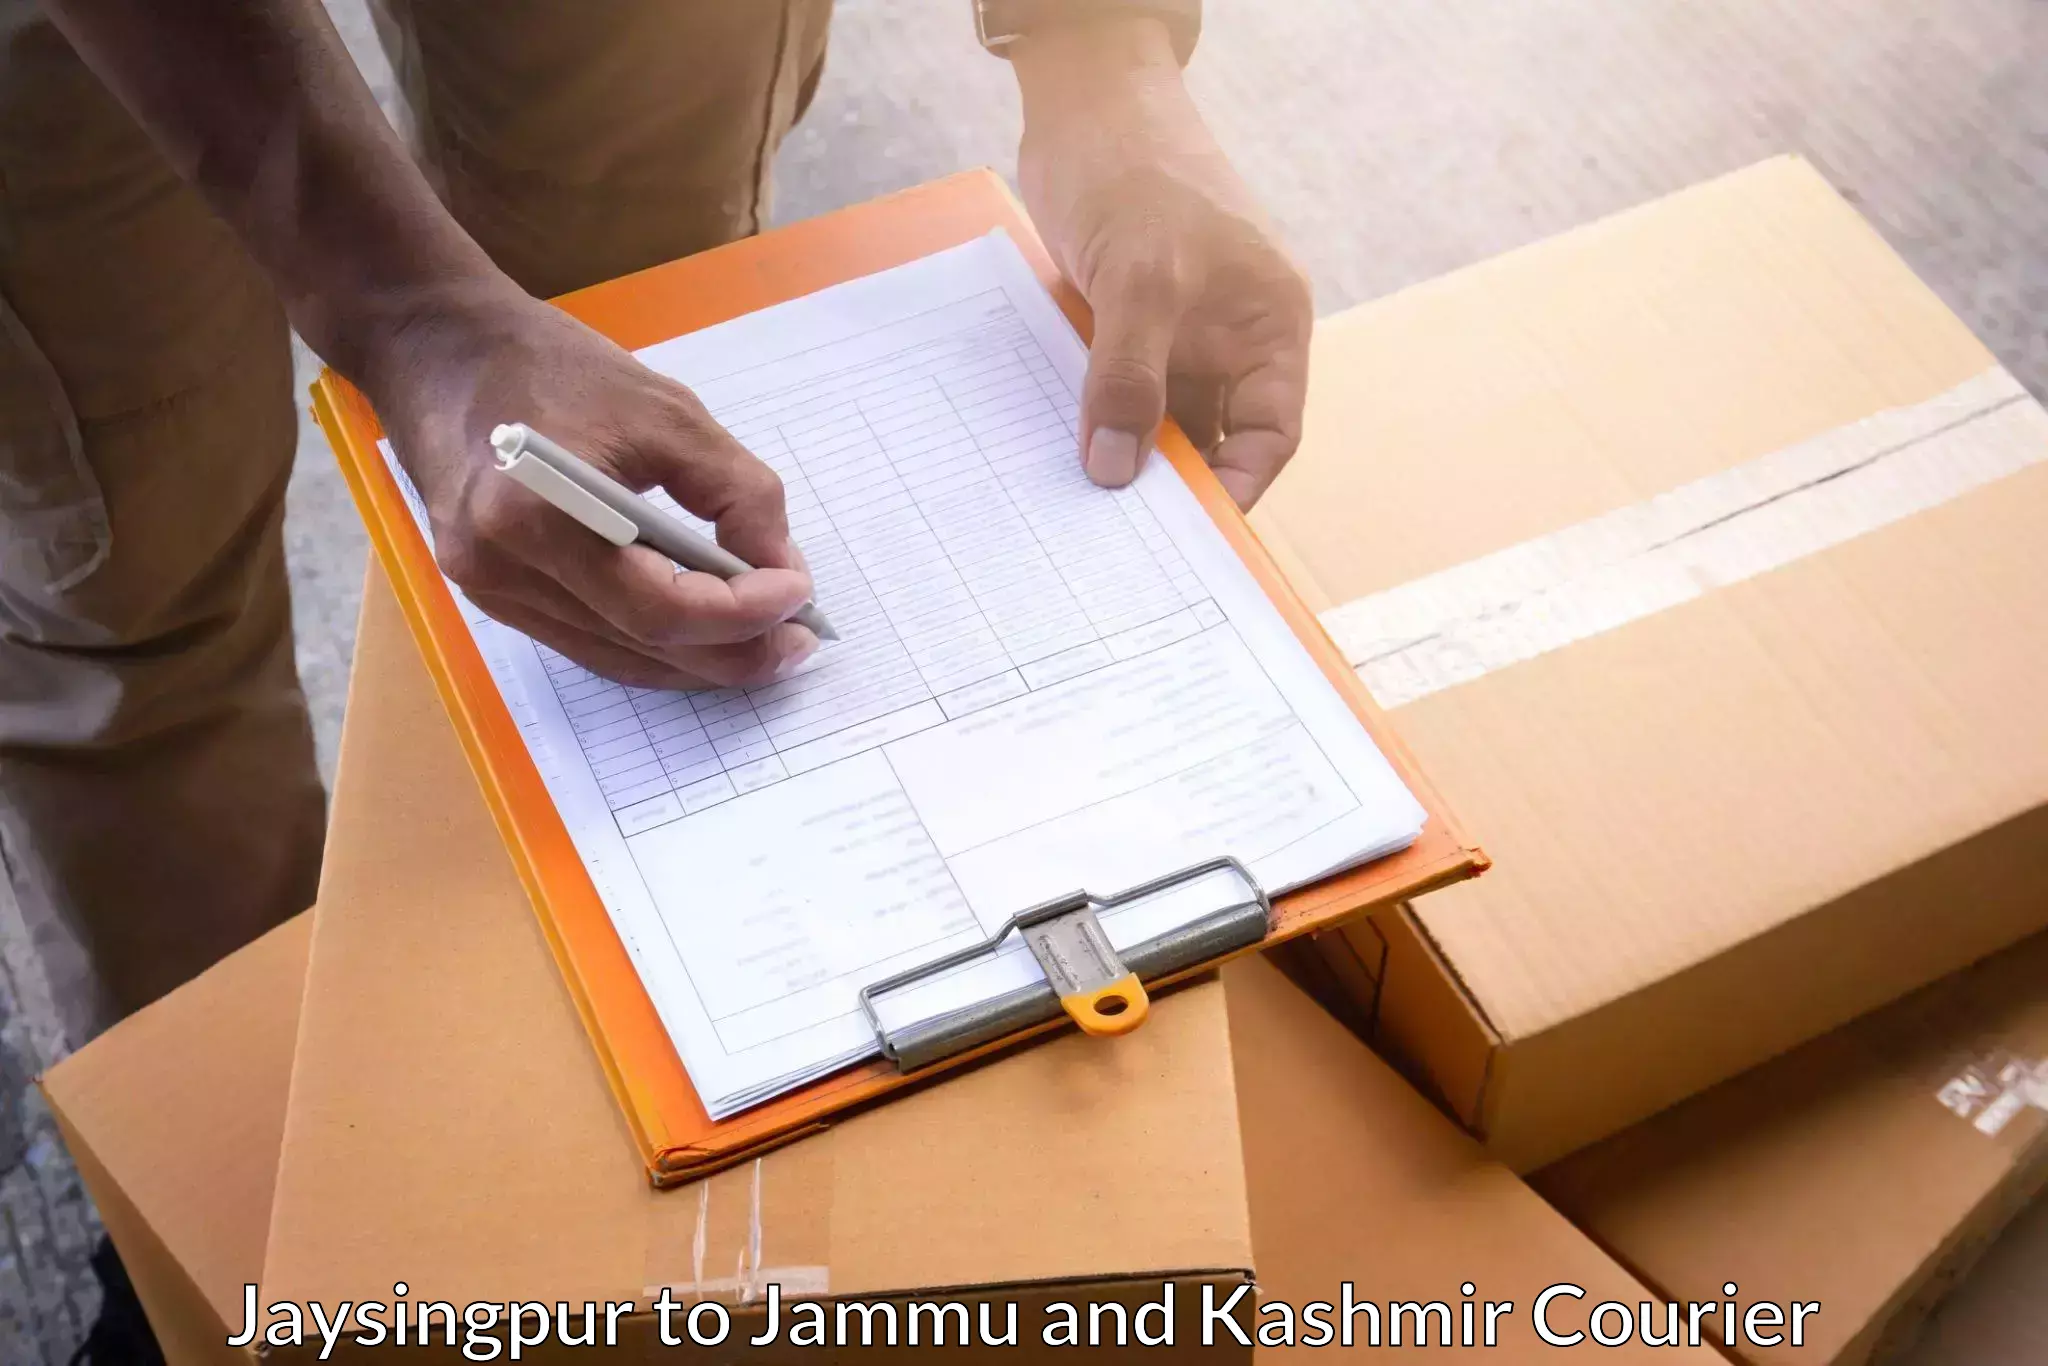 International courier networks Jaysingpur to Jammu